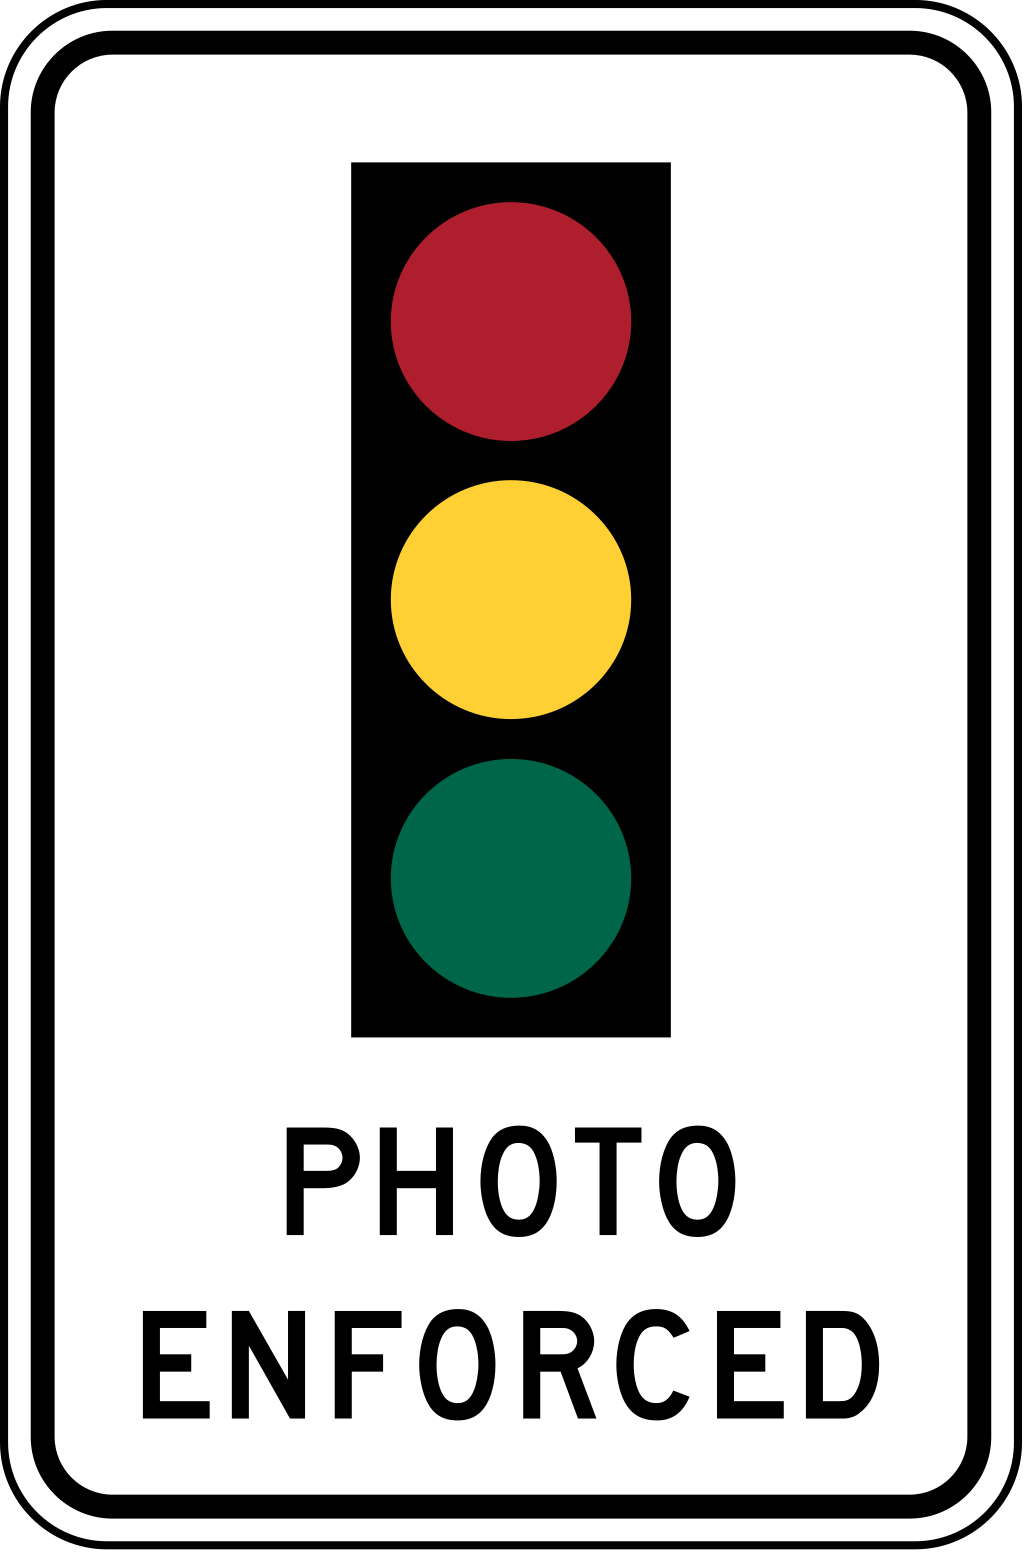 Photo Enforced Traffic Sign